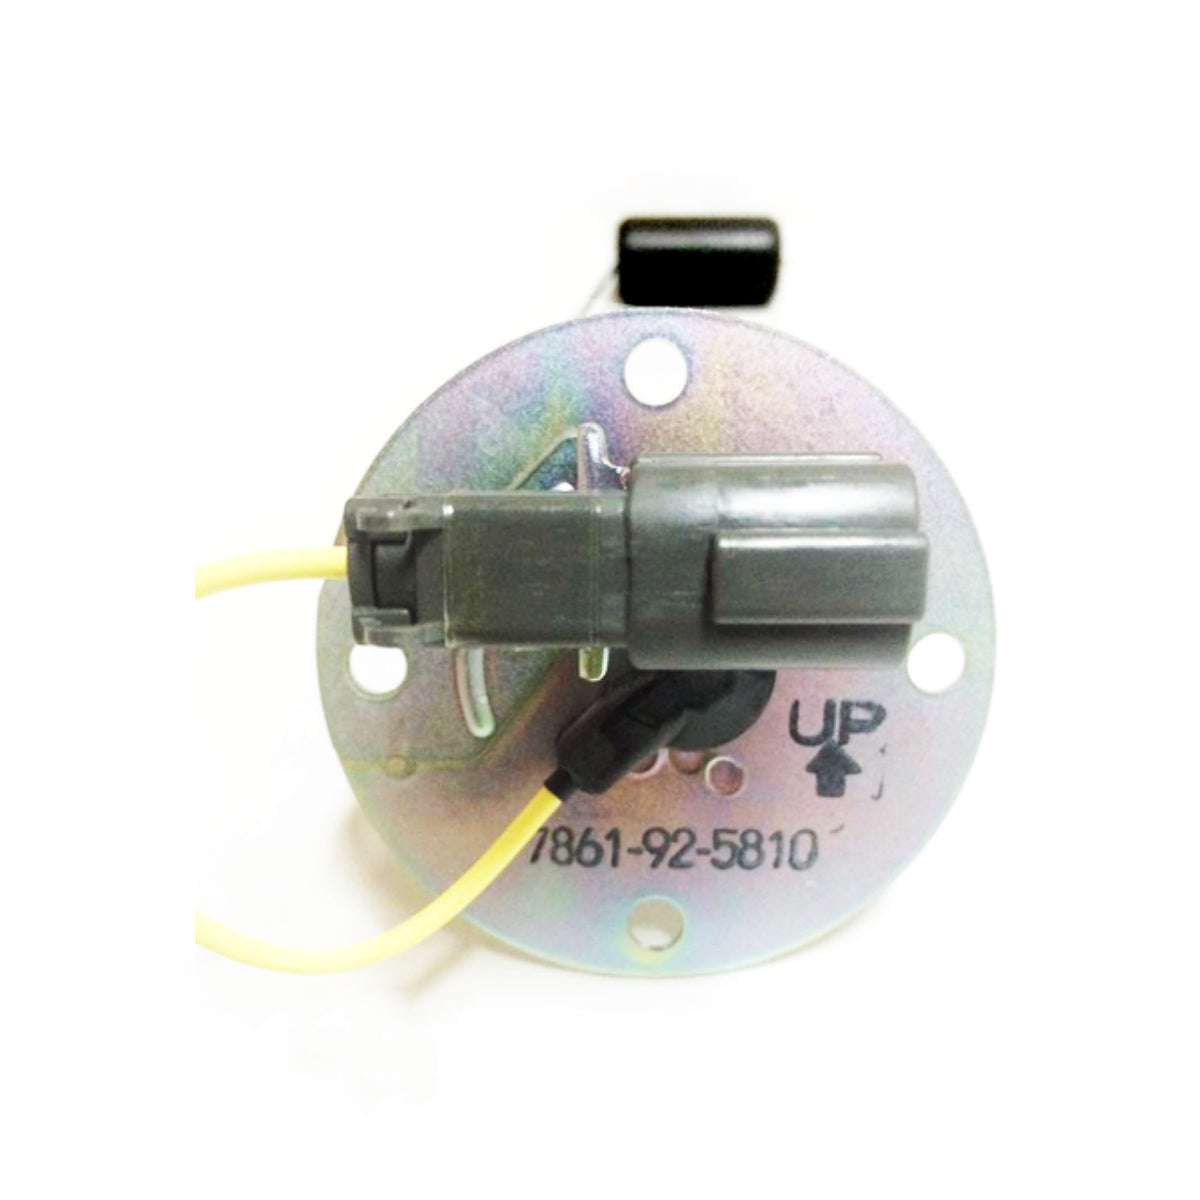 7861-92-5810 Tank Float Fuel Oil Level Sensor for Komatsu PC130  PC300 - Sinocmp